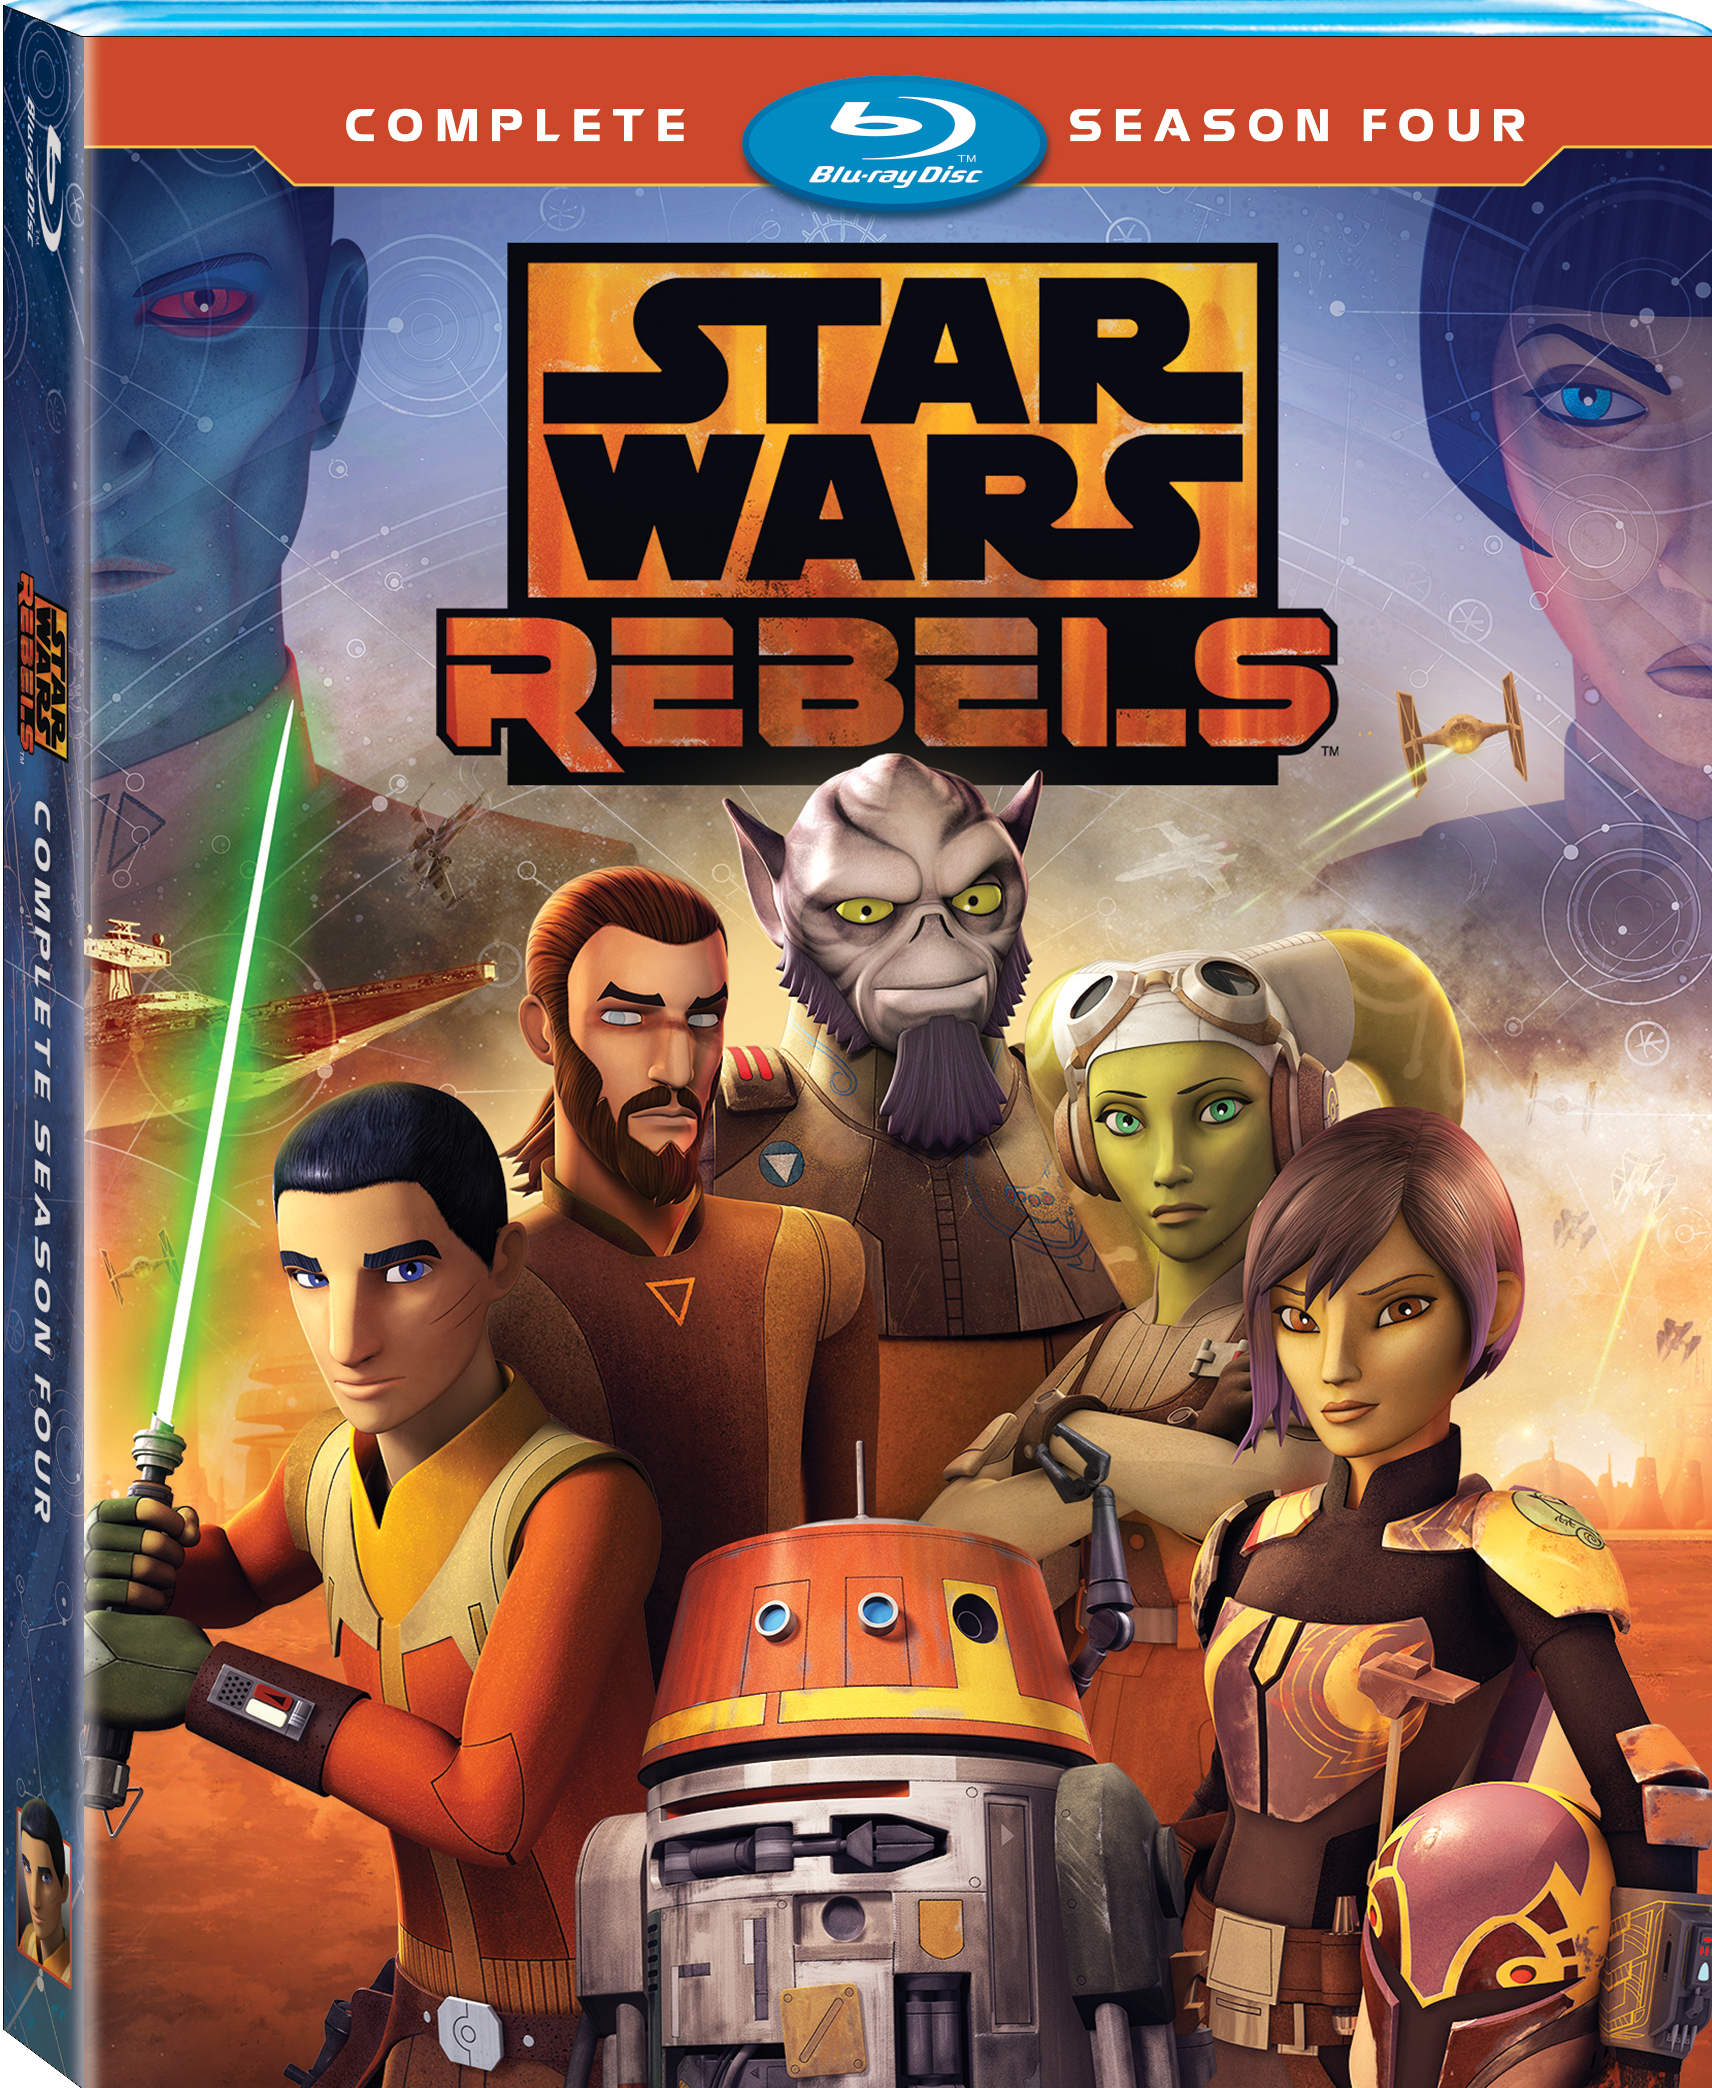 Star Wars Rebels Season 4 #starwars #starwarsrebels #movies #shows #ad